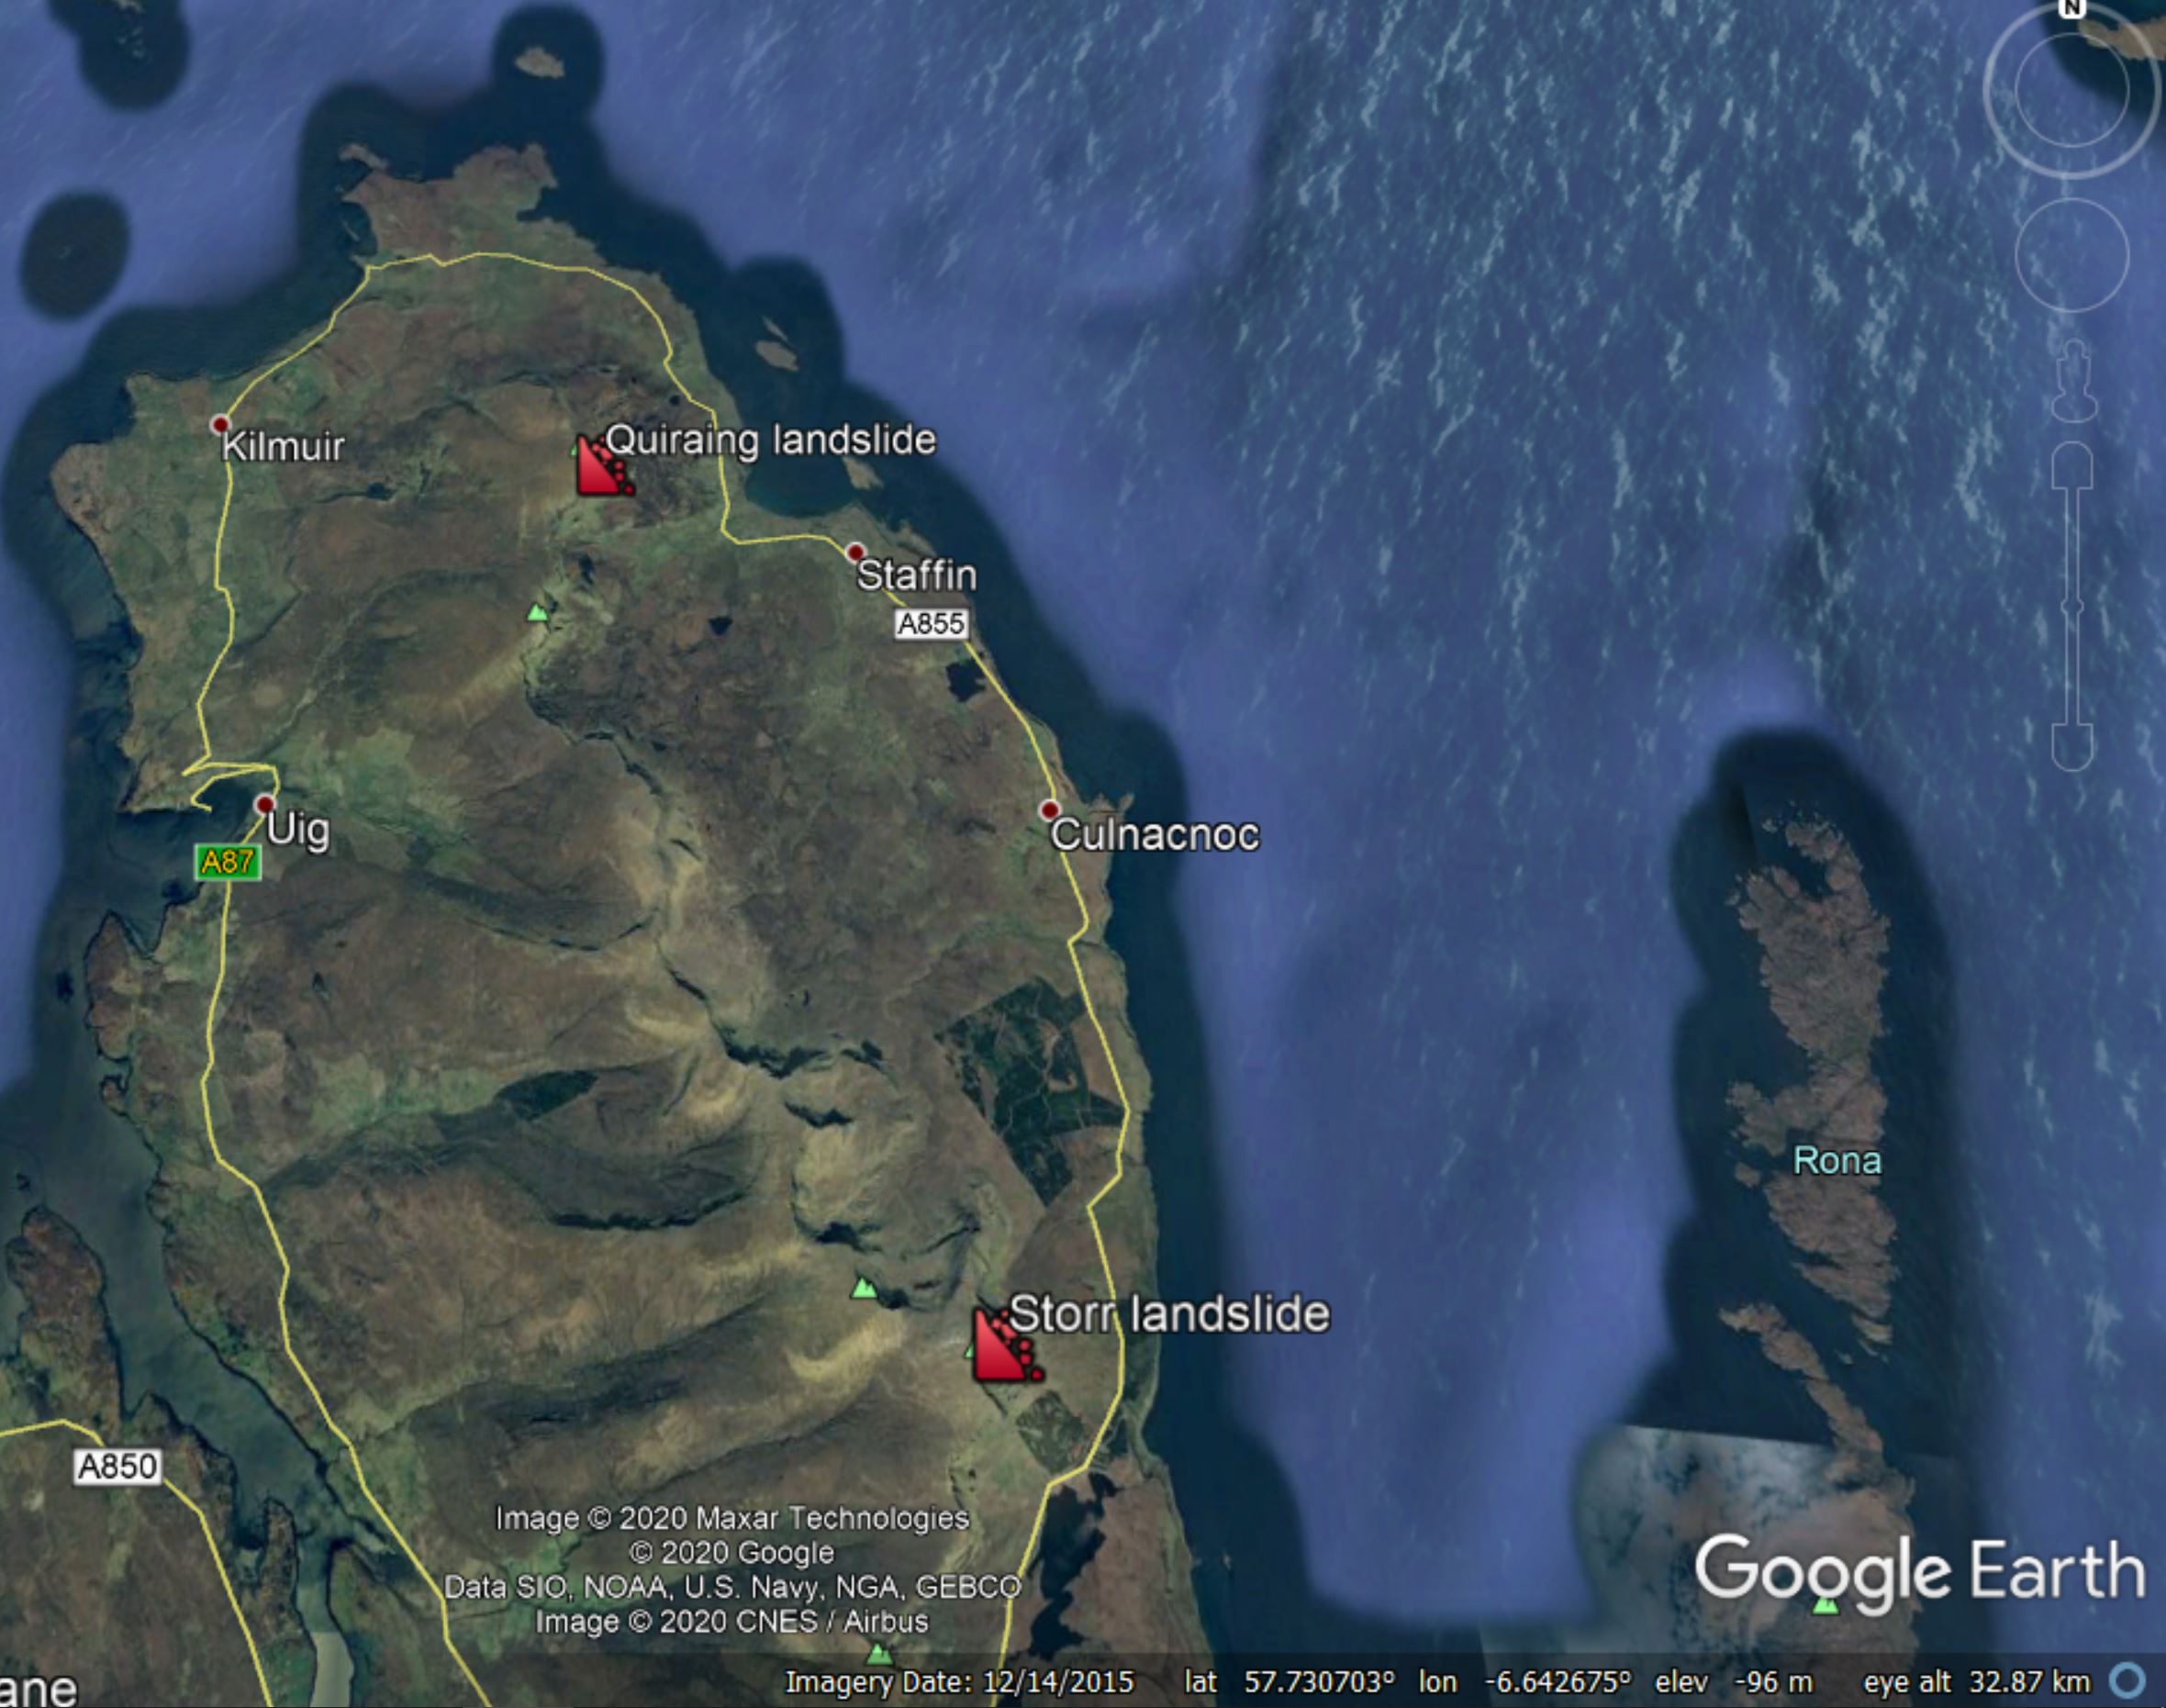 Google Earth image of the Trotternish peninsula